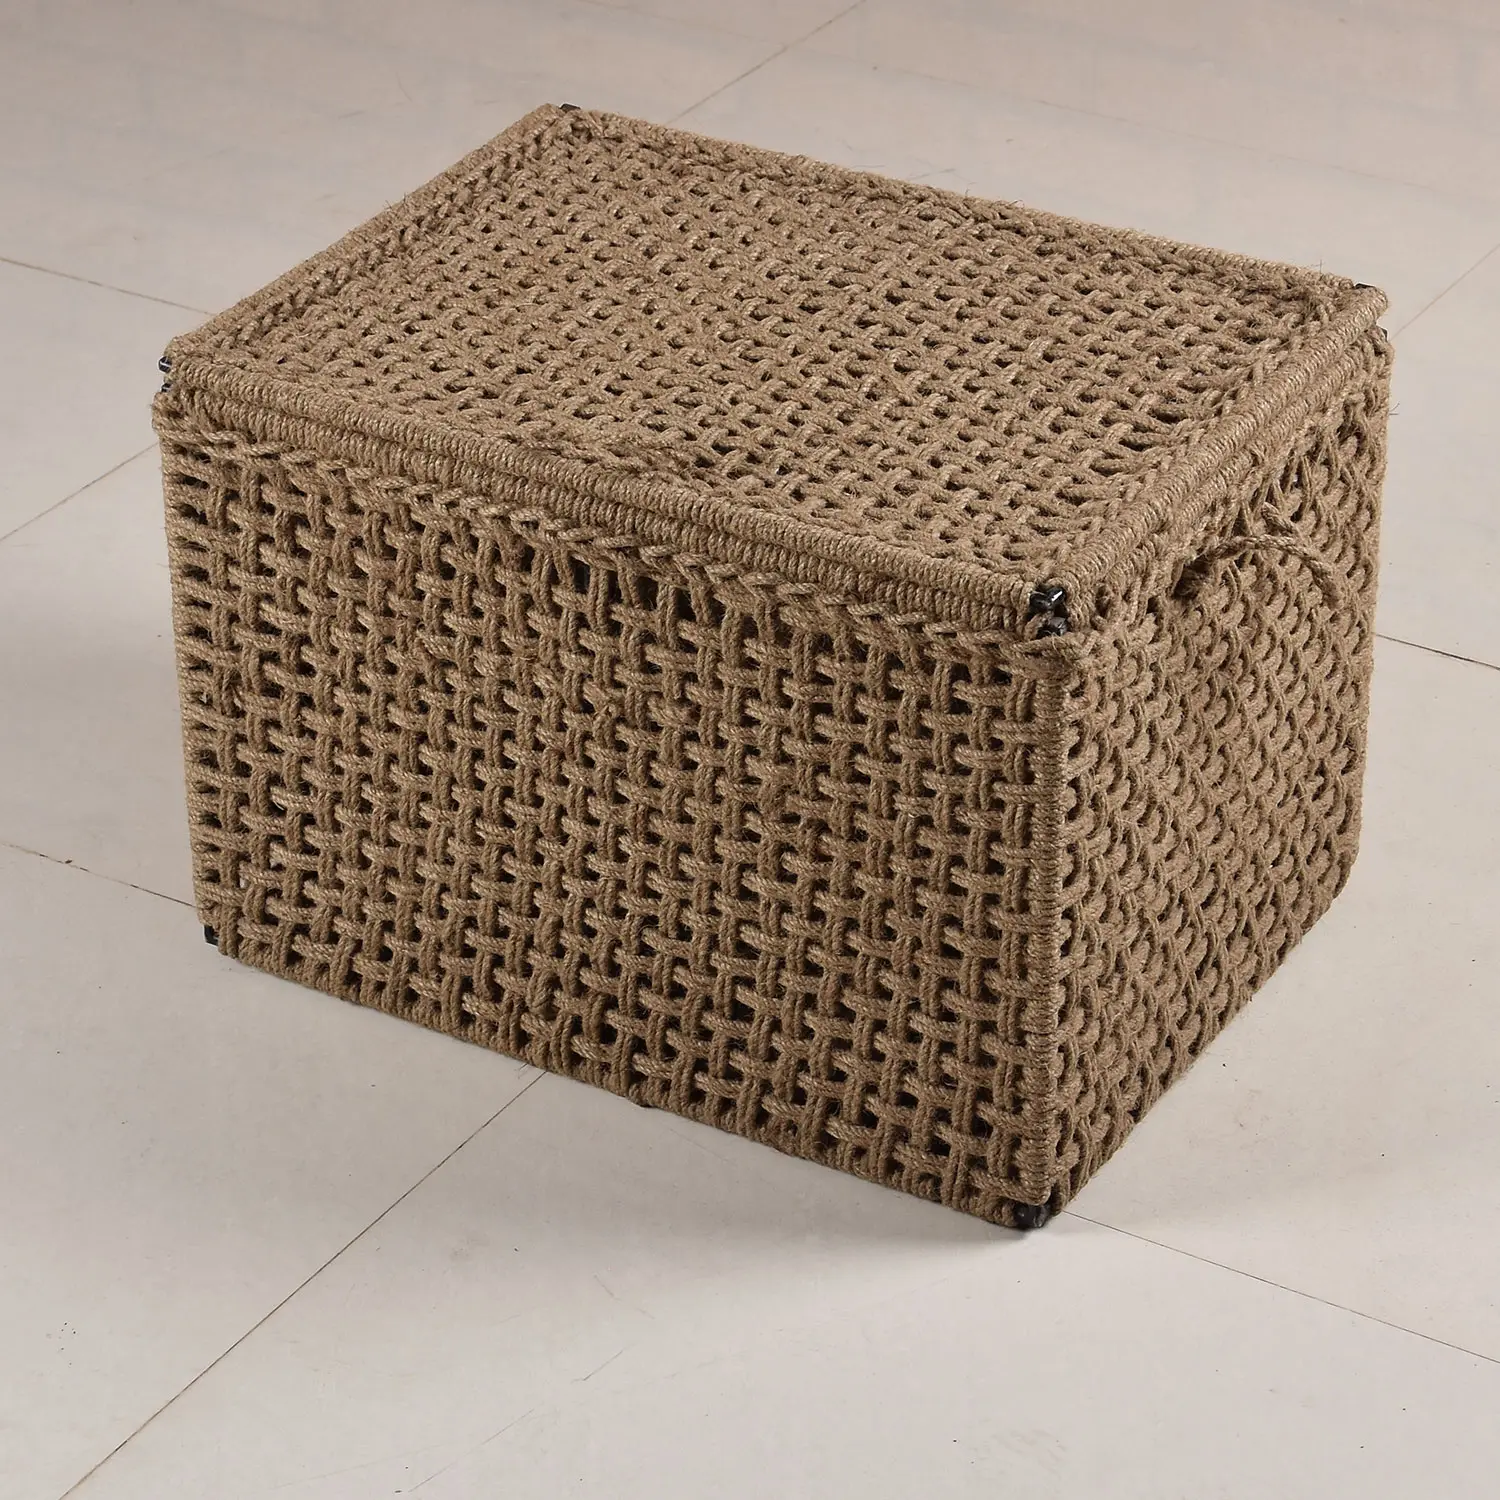 Knit Basket Small - popular handicrafts